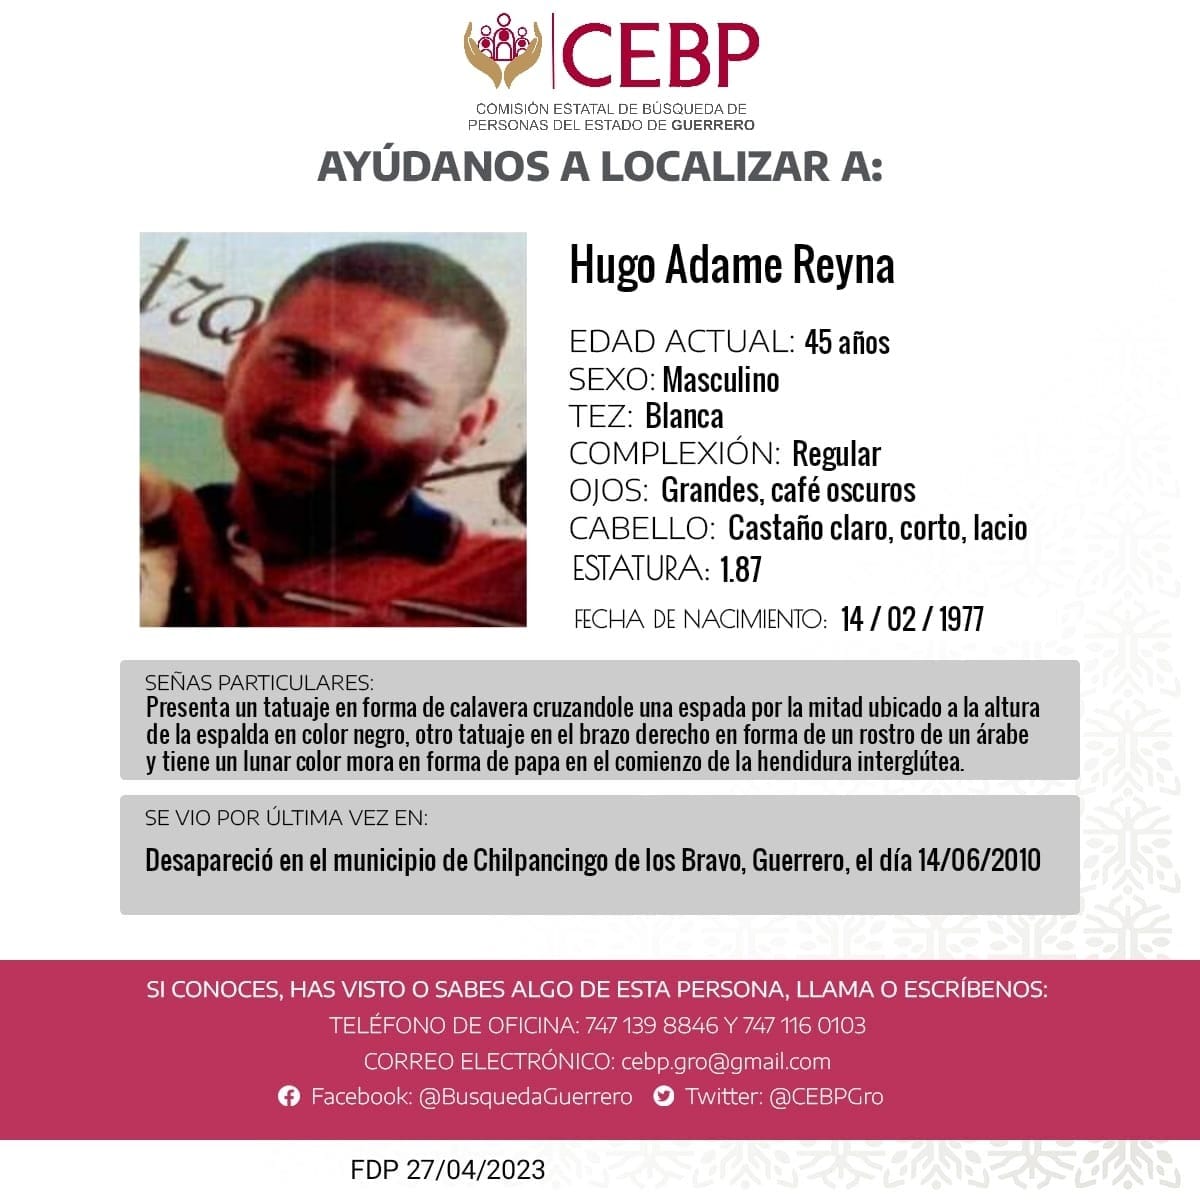 Hugo Adame Reyna